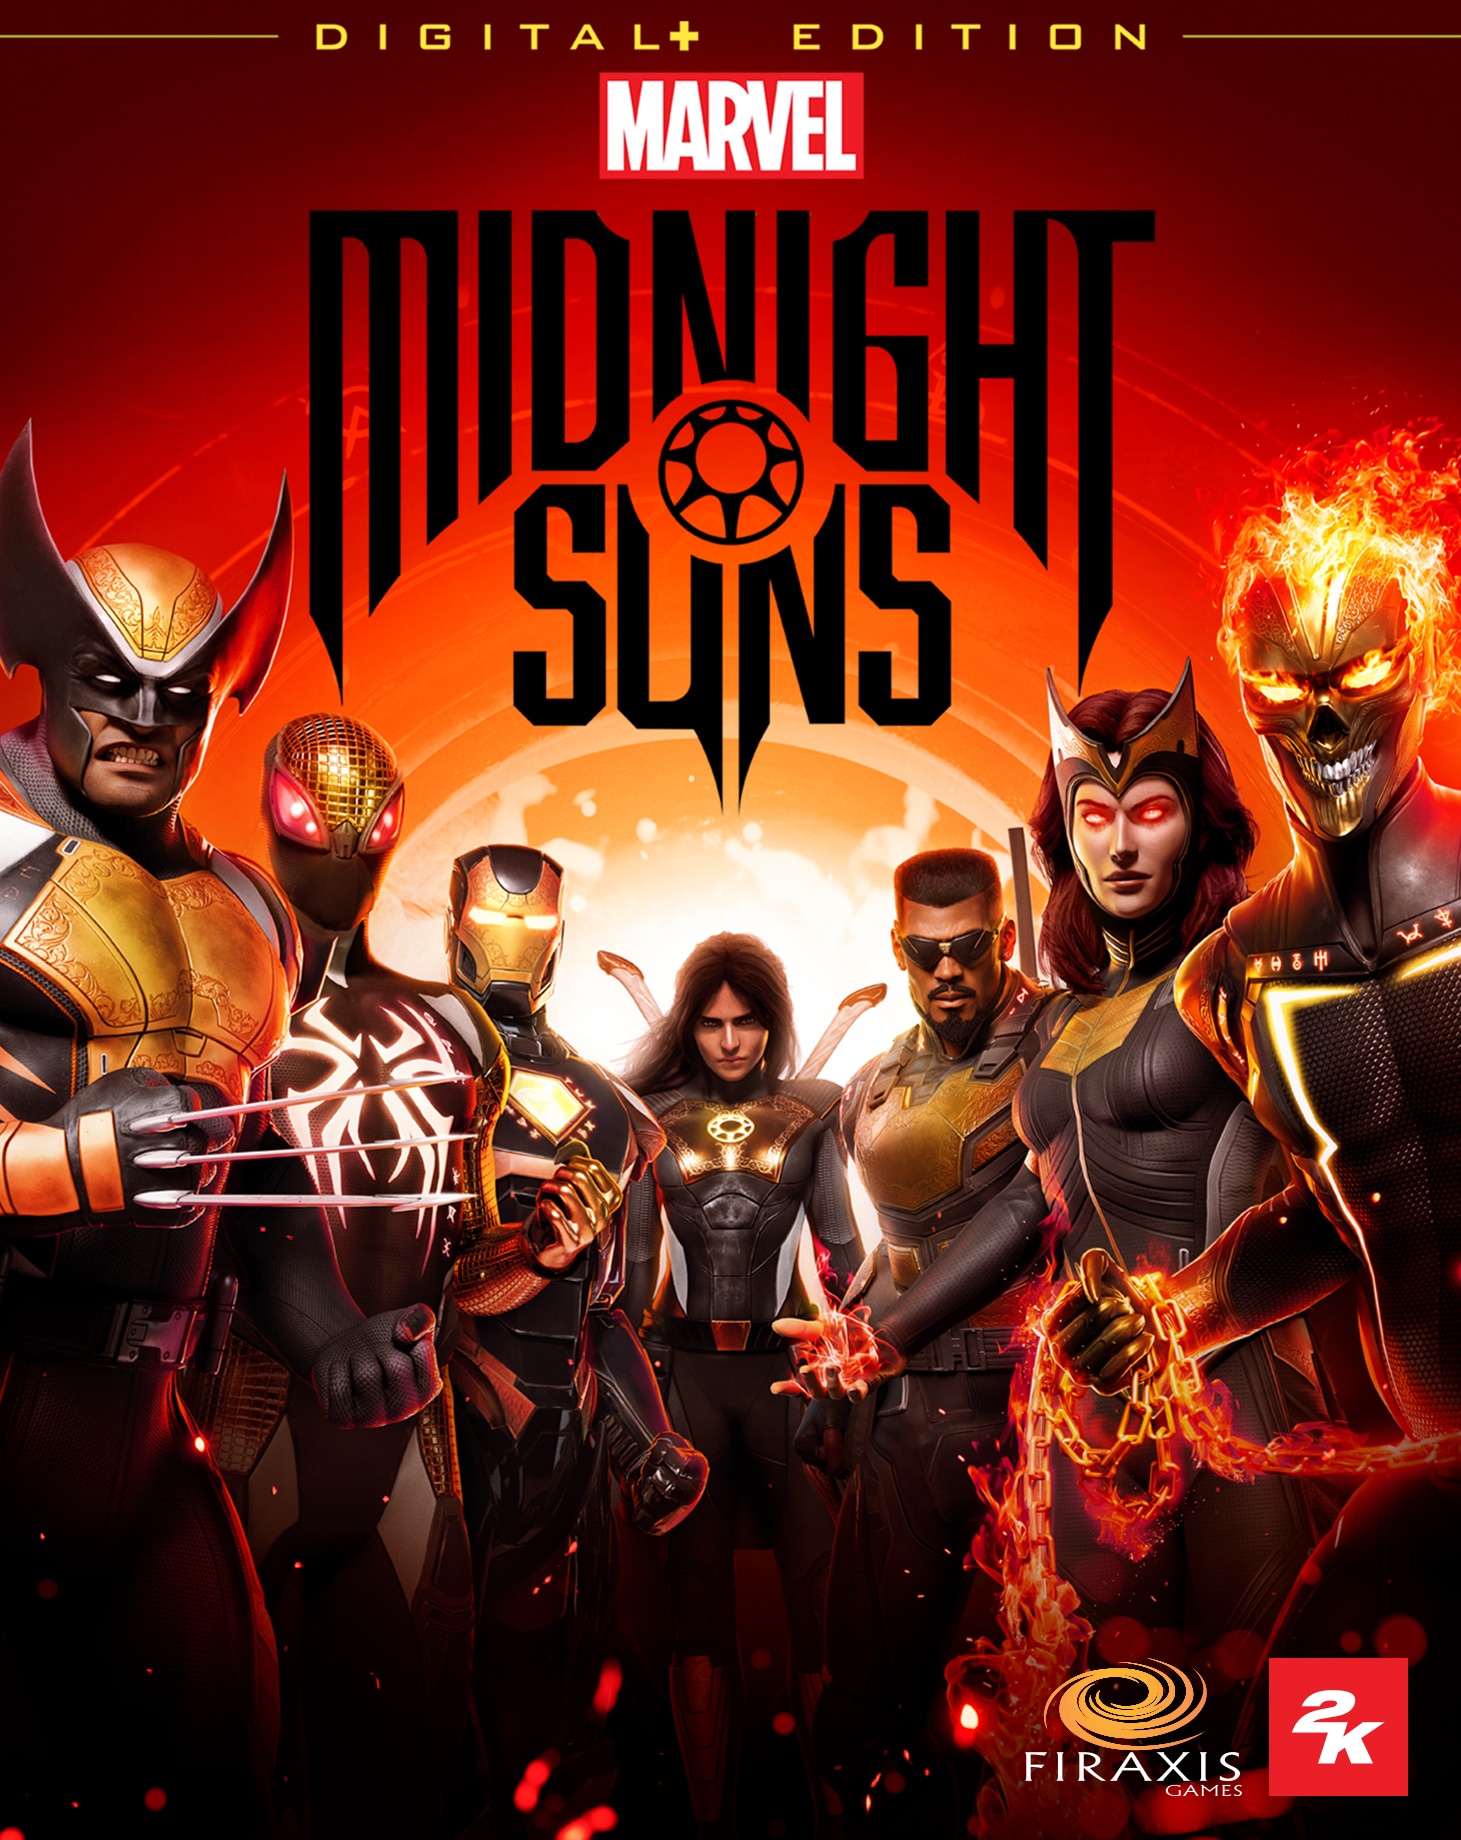 Marvel s Midnight Suns Digital+ Edition - PC Windows - Elkjøp